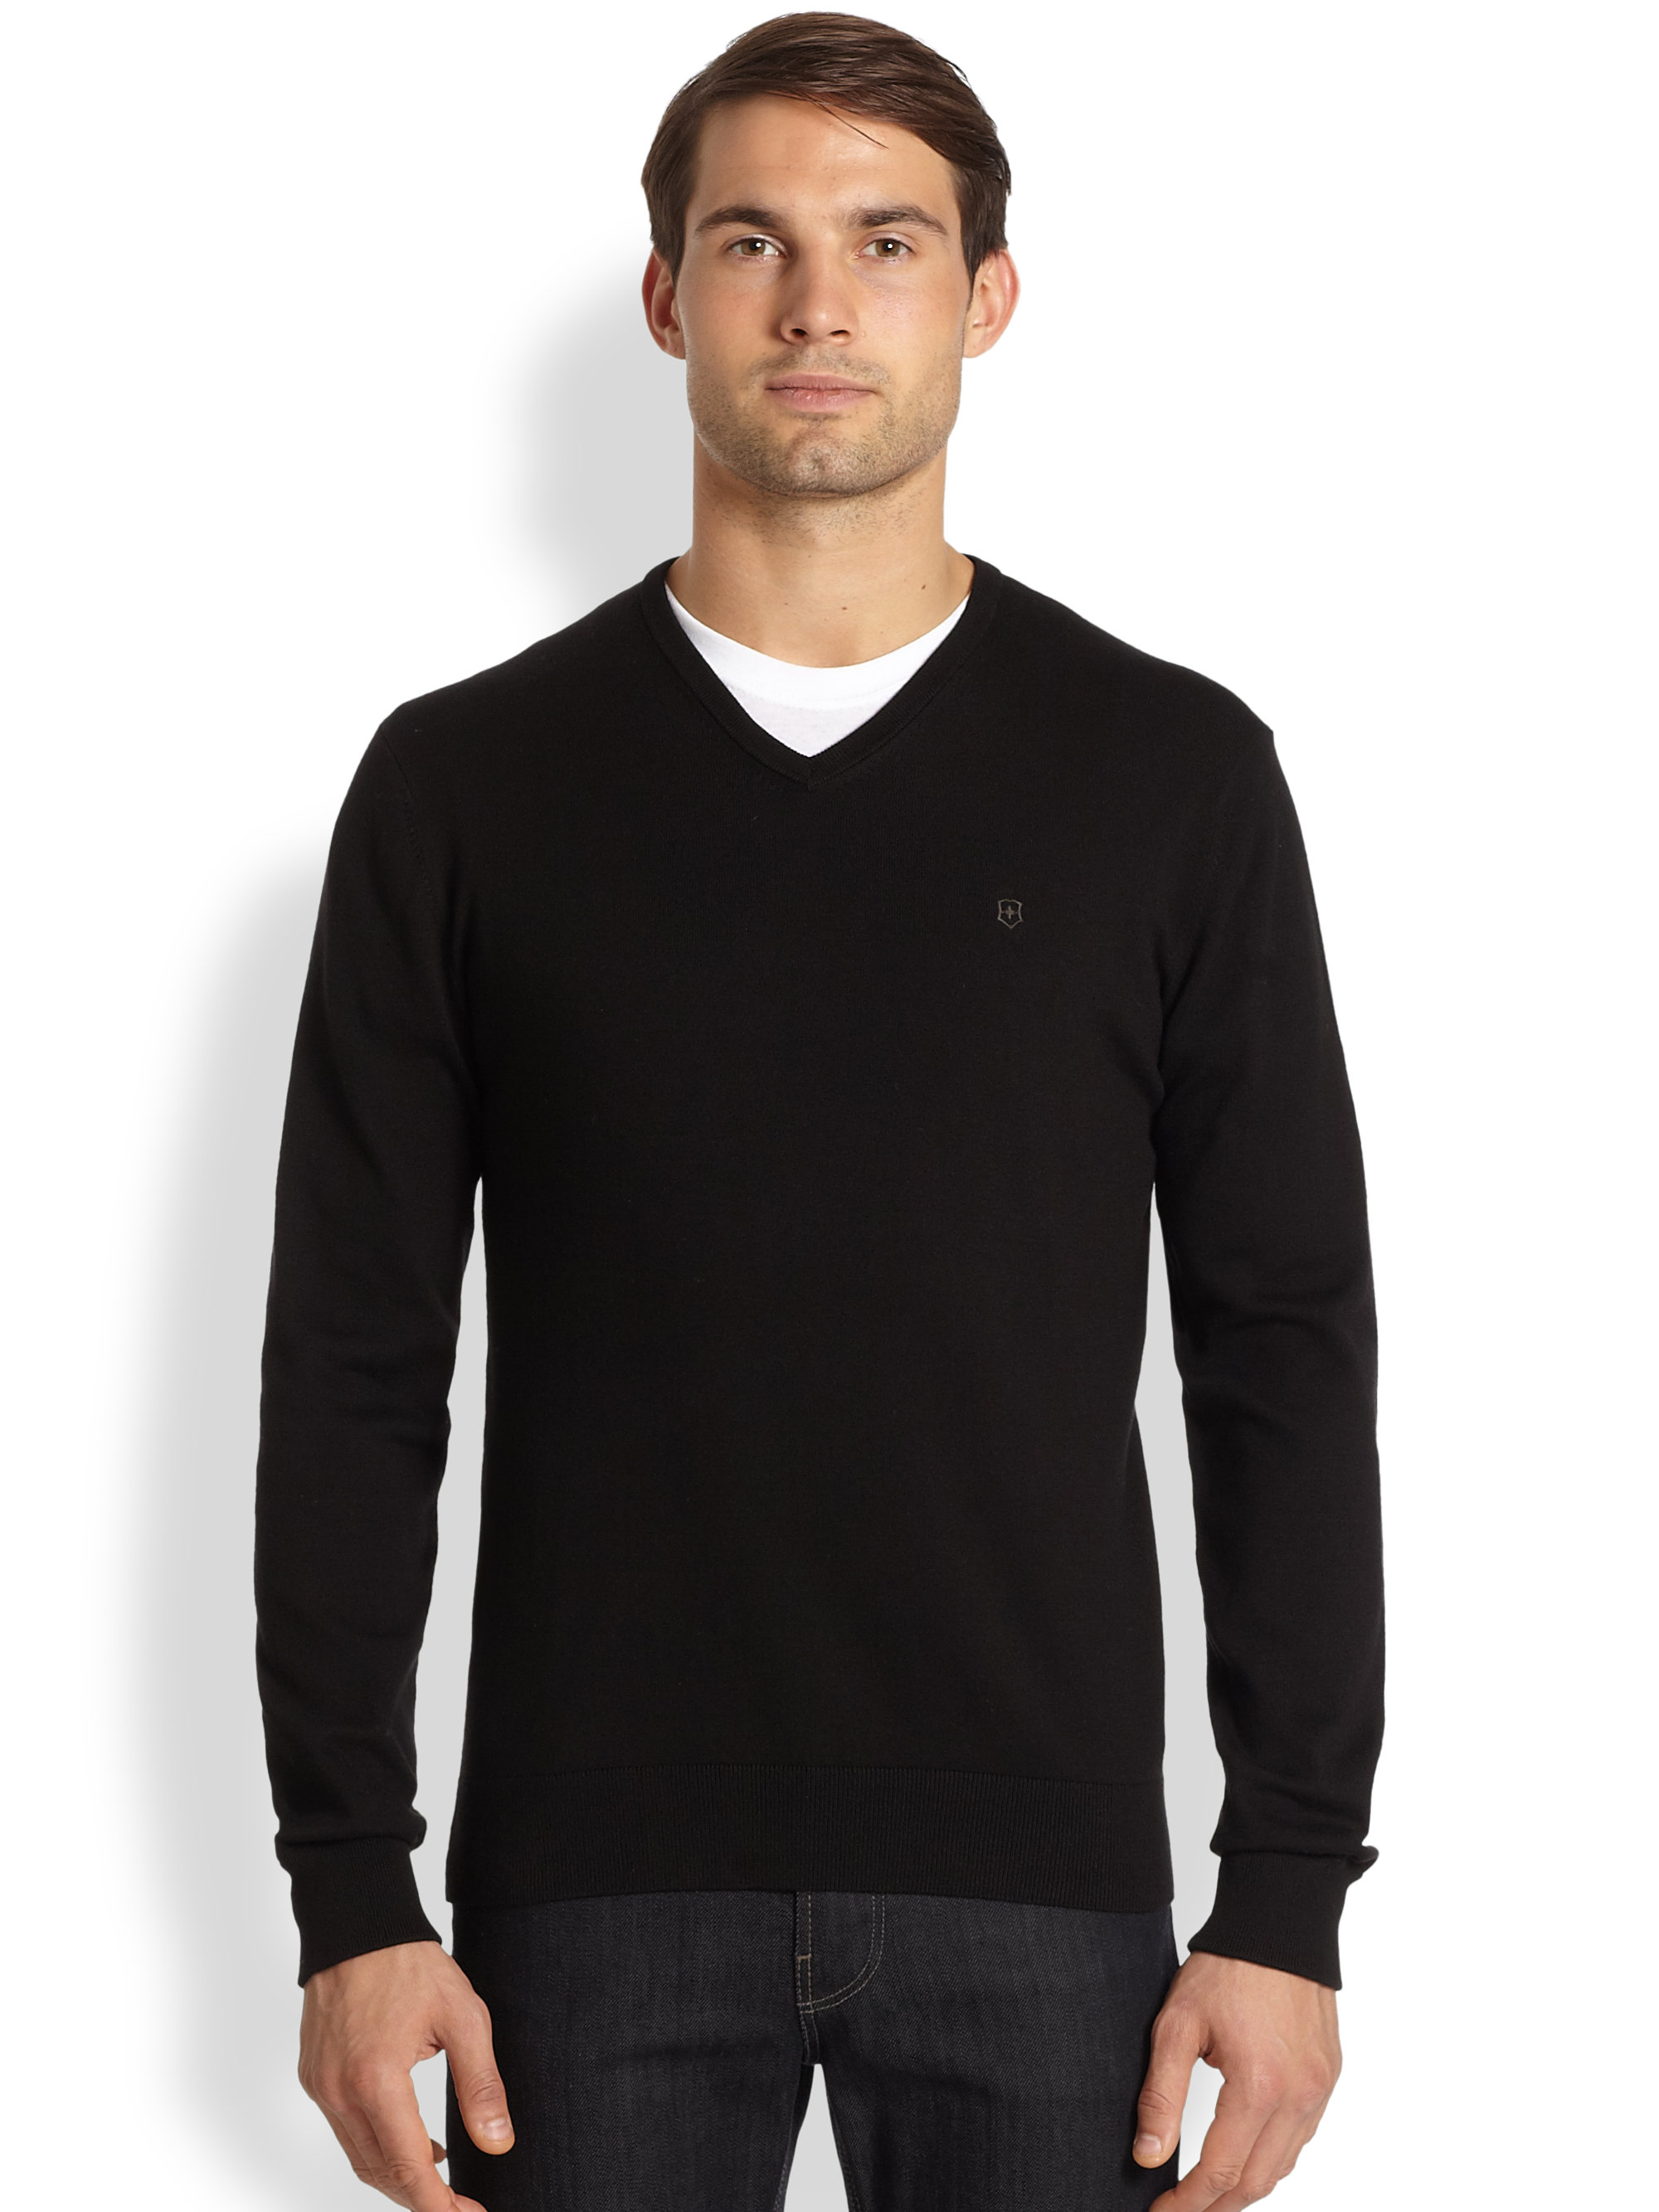 Victorinox Suisse Vneck Sweater in Black for Men